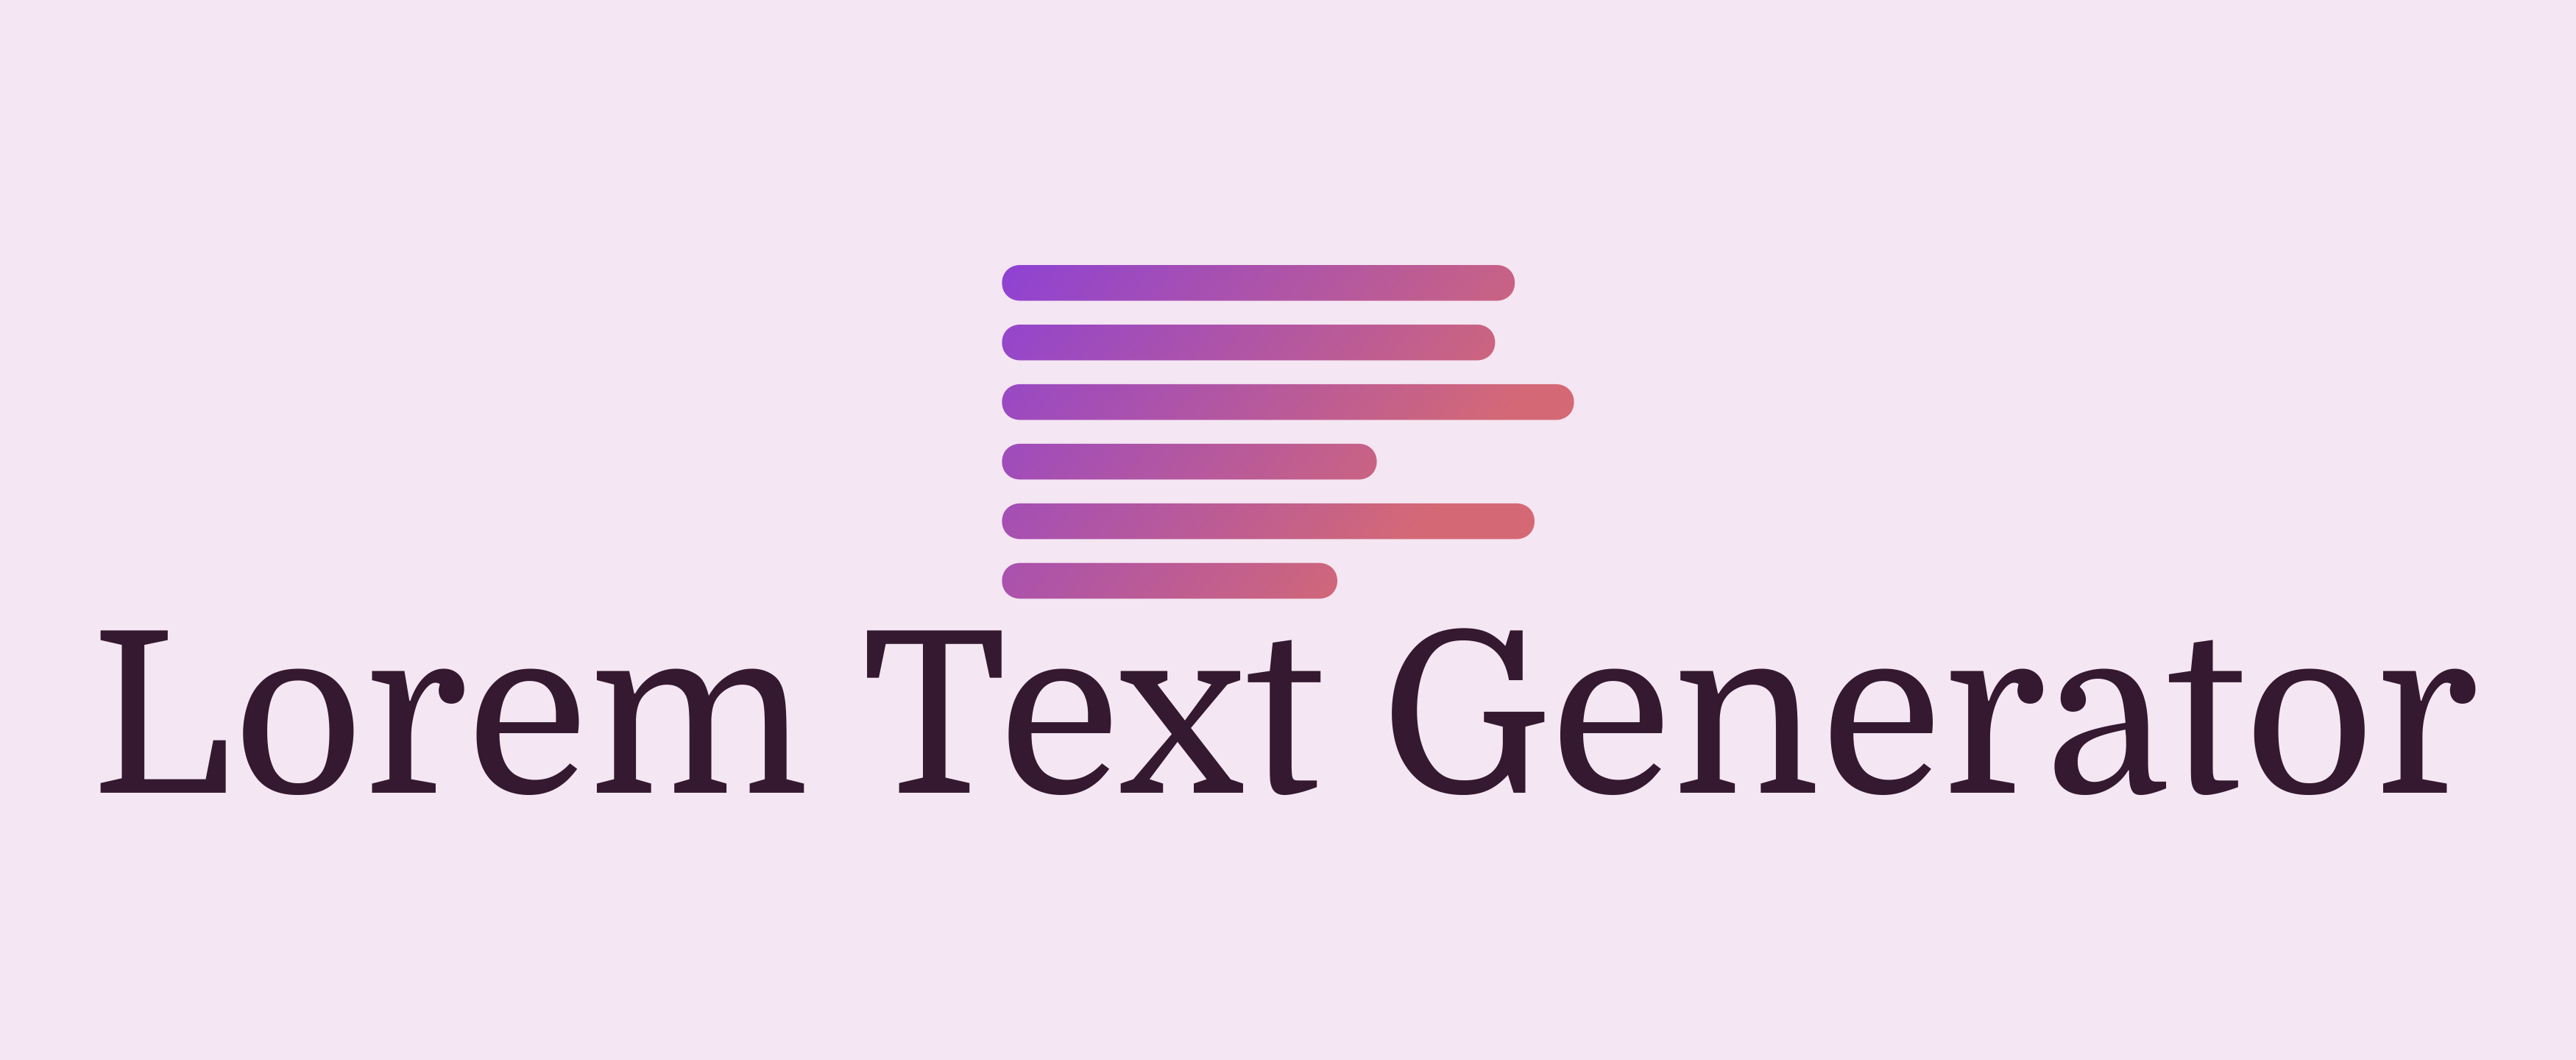 lorem_text_generator_cover